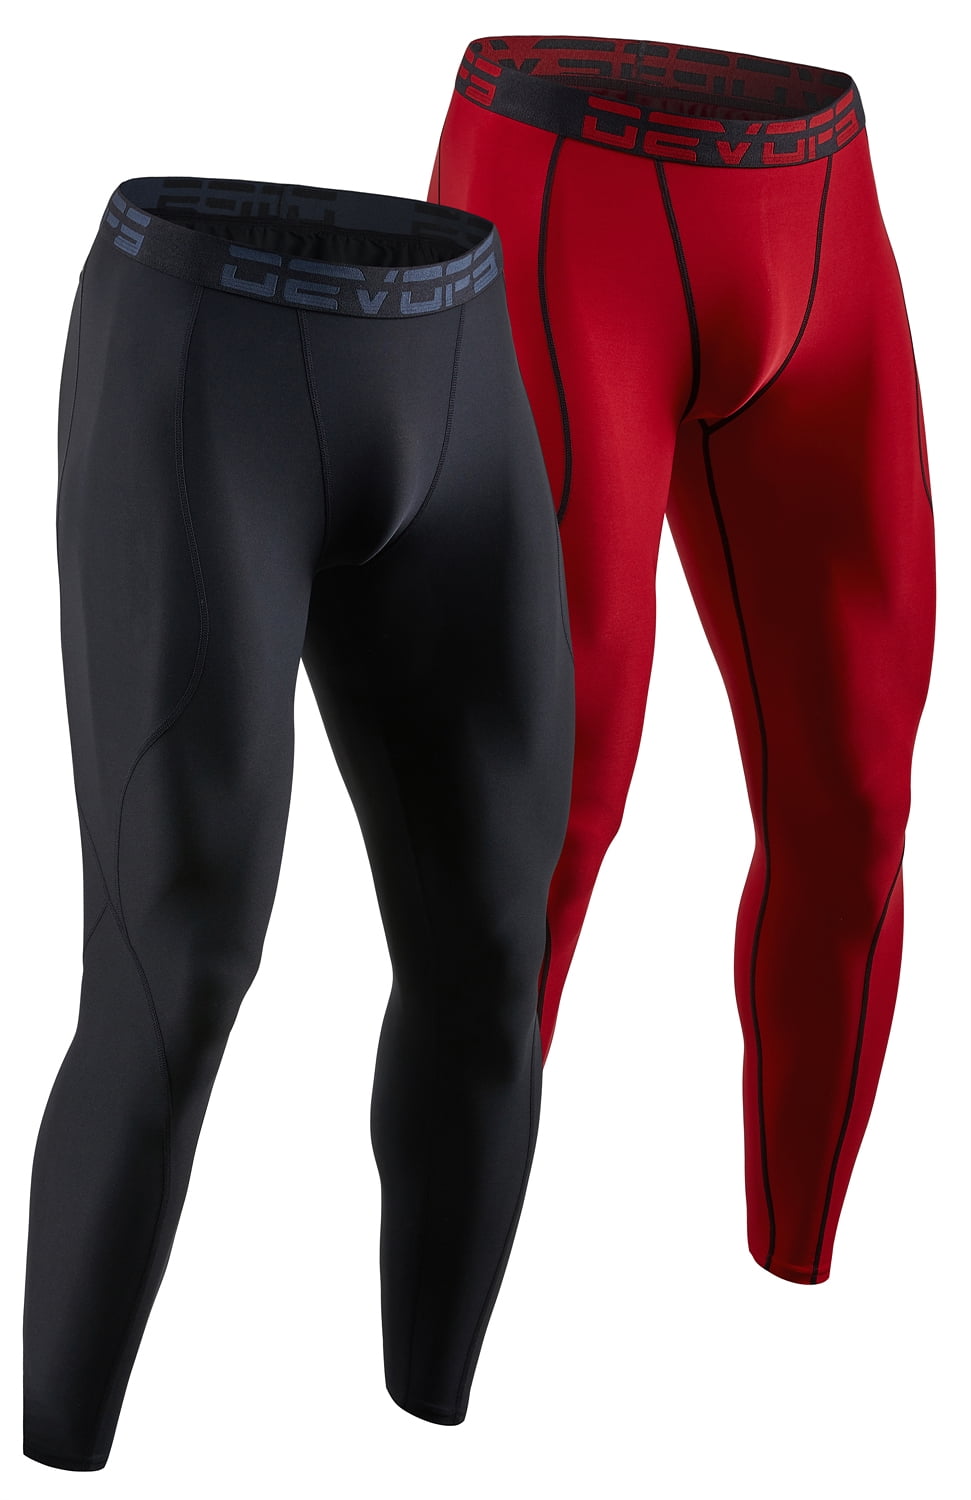 DEVOPS 2 Pack Men's Compression Pants Athletic Leggings (Small, Black/Red)  